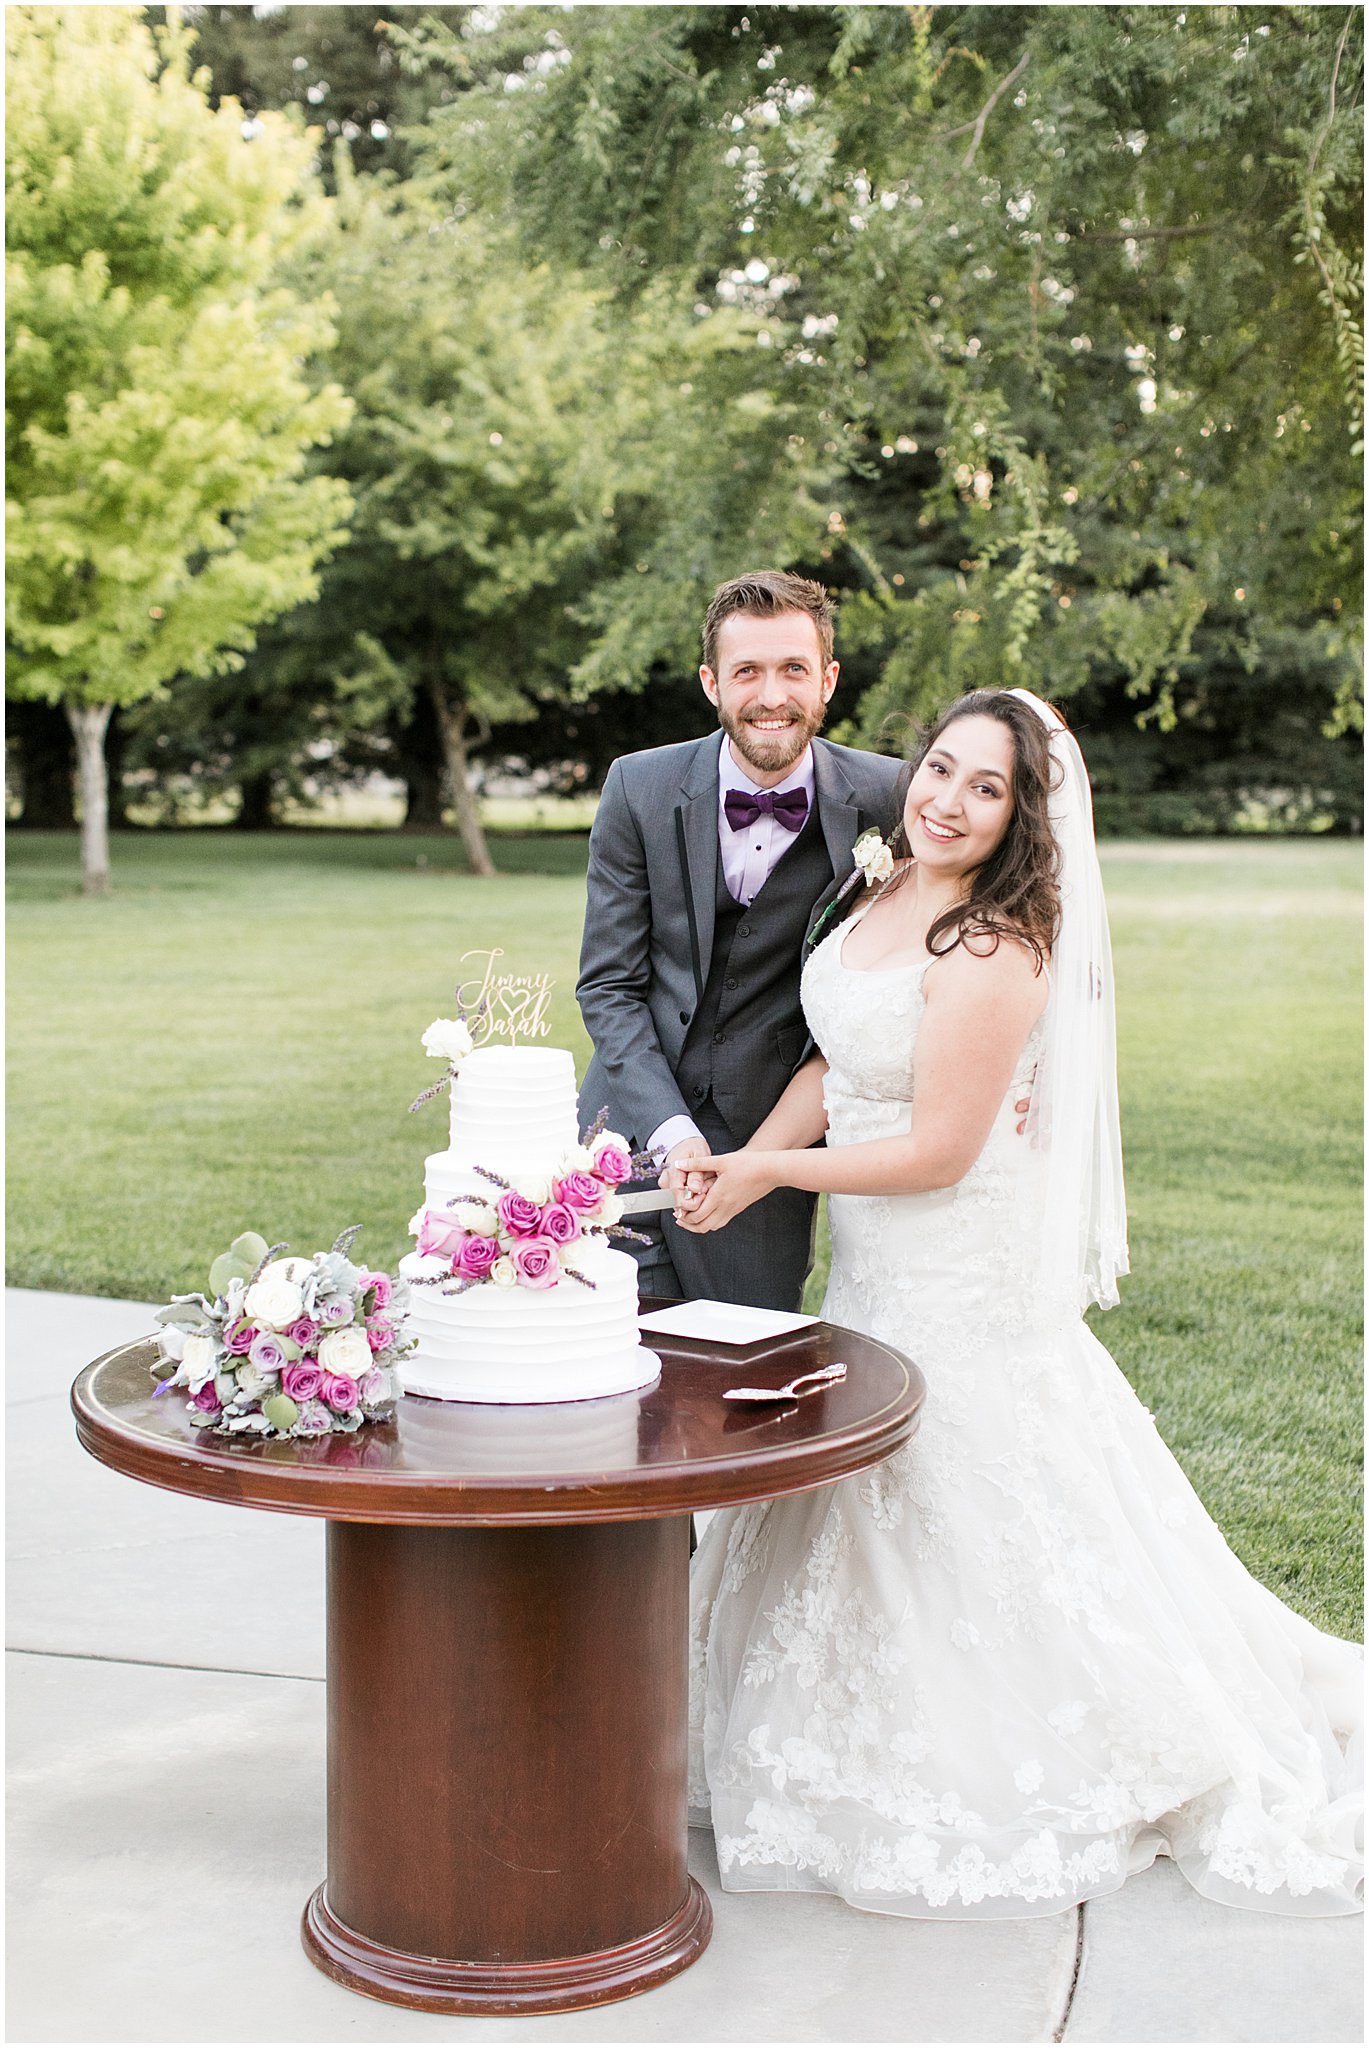 Modesto Wedding - California Wedding Photographer - Angela Sue Photography_0145.jpg